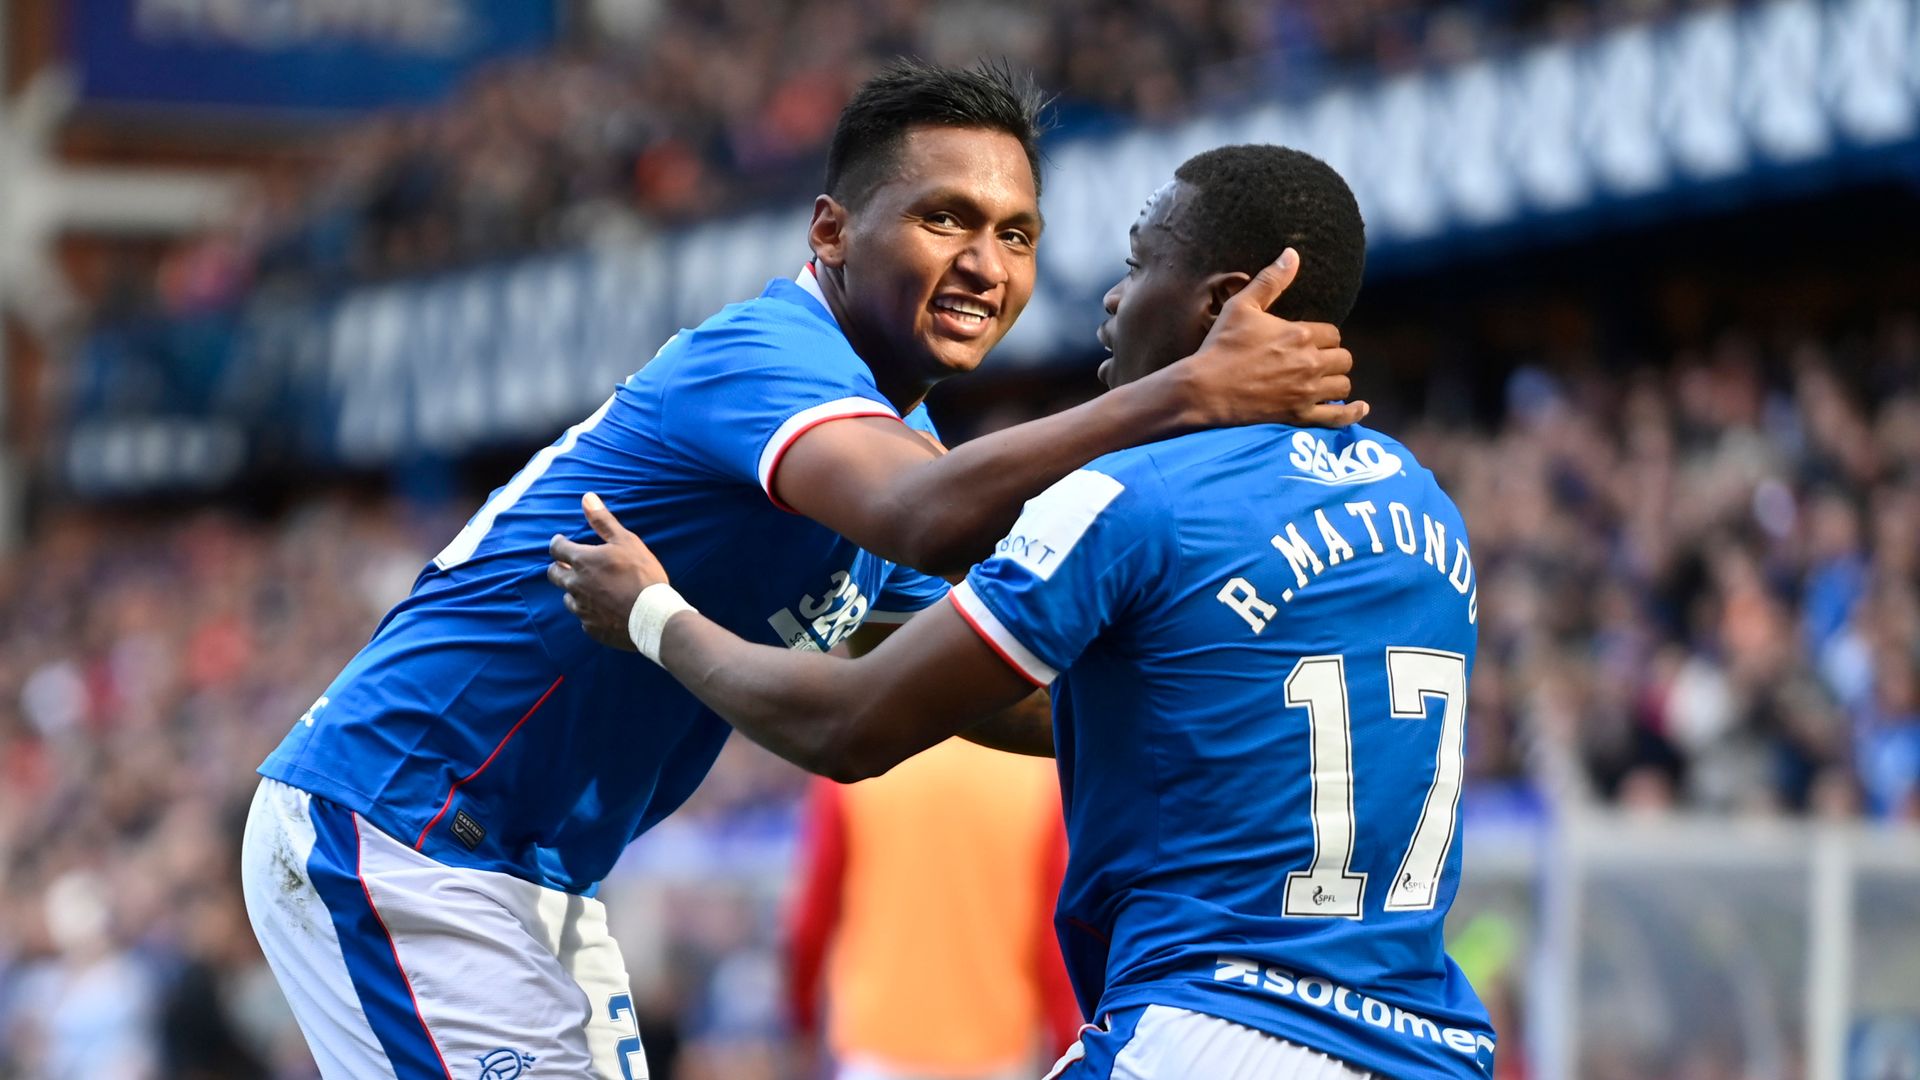 Rangers overcome stubborn St Mirren with late goals